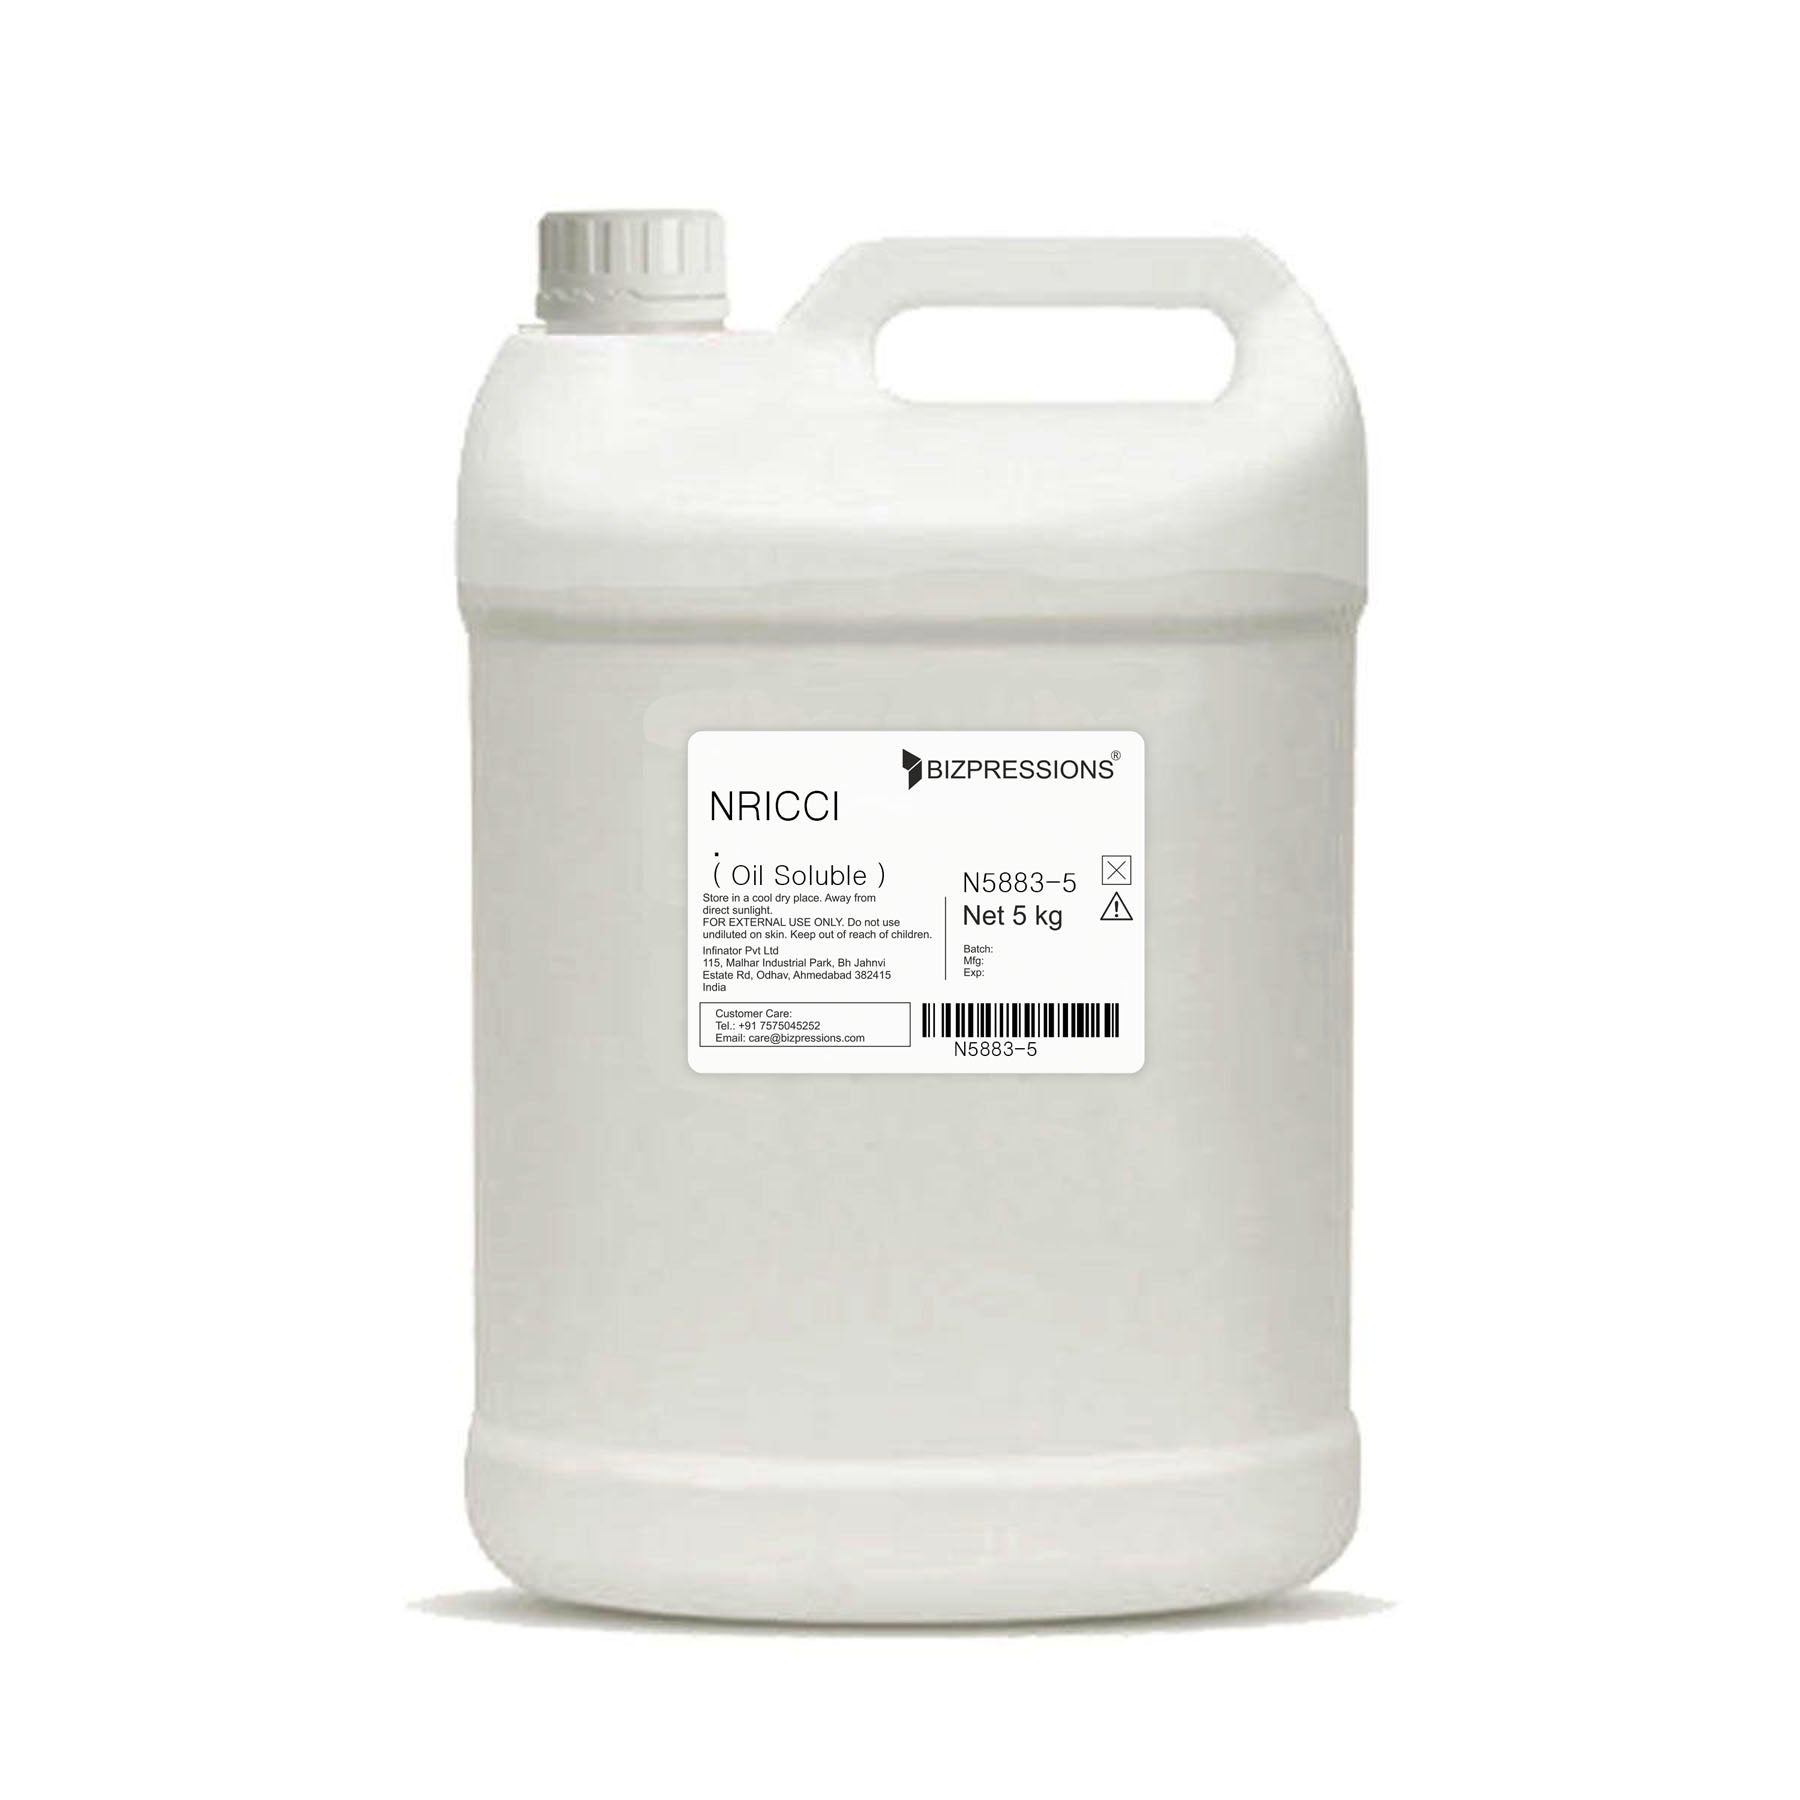 NRICCI - Fragrance ( Oil Soluble ) - 5 kg